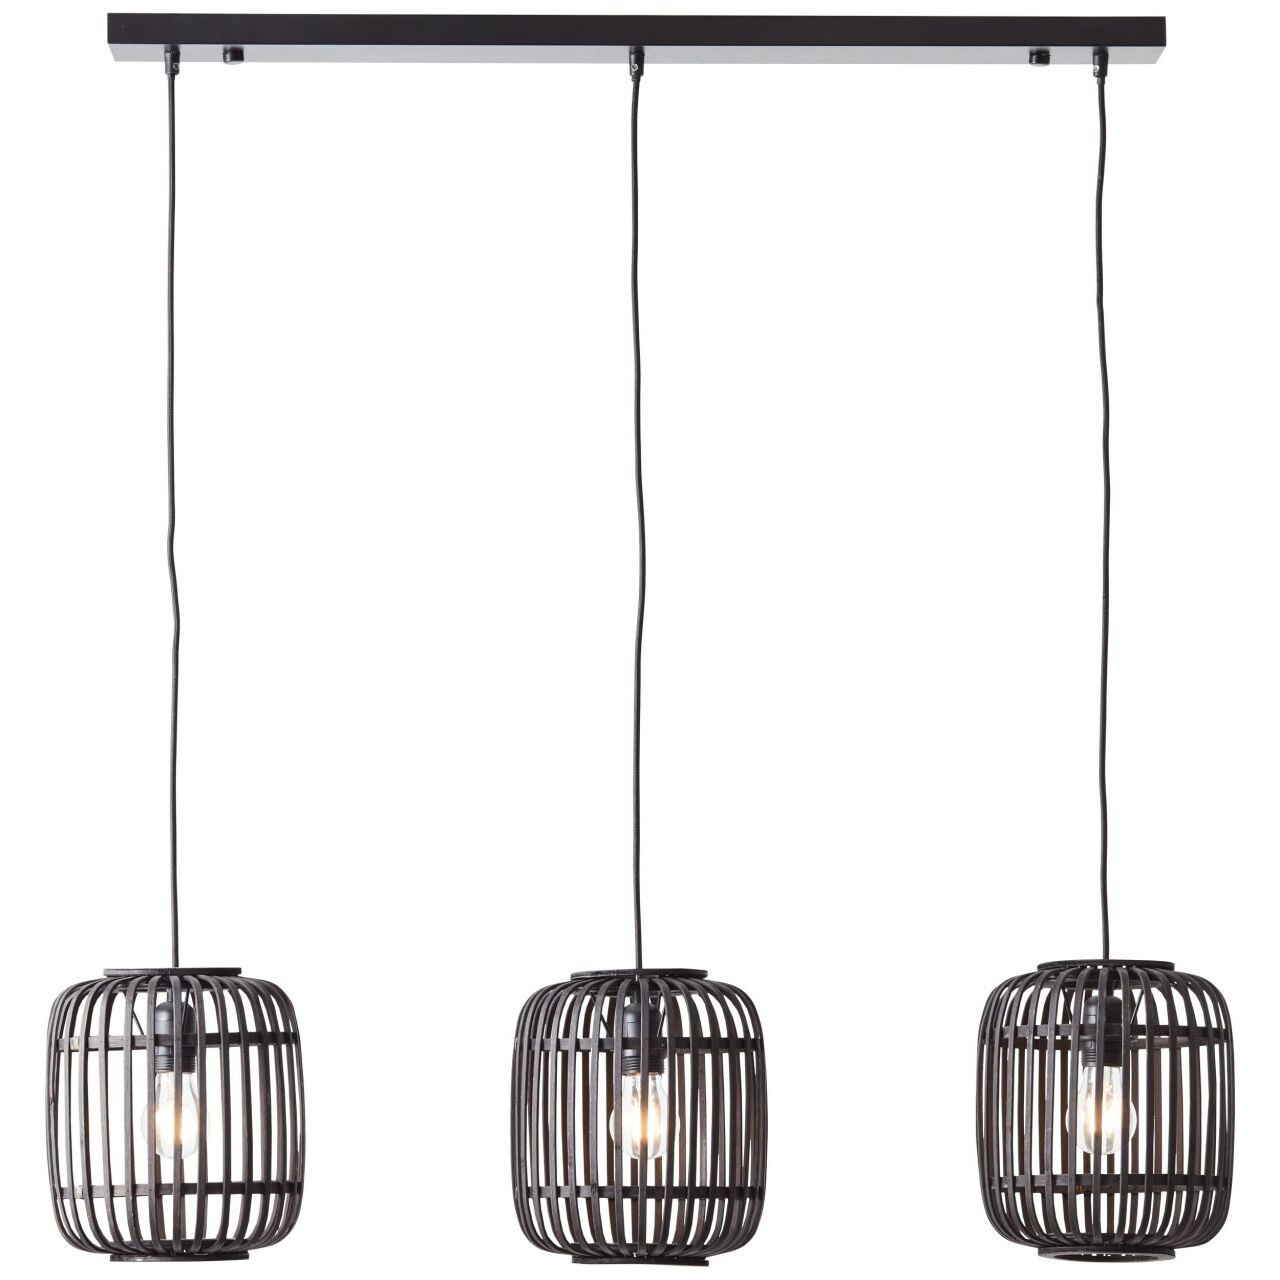 BRILLIANT Lampe, Woodrow Pendelleuchte, 3-flammig holz dunkel/schwarz, Metall/Bambus, 3x A60, E27, 60W,Normallampen (nic